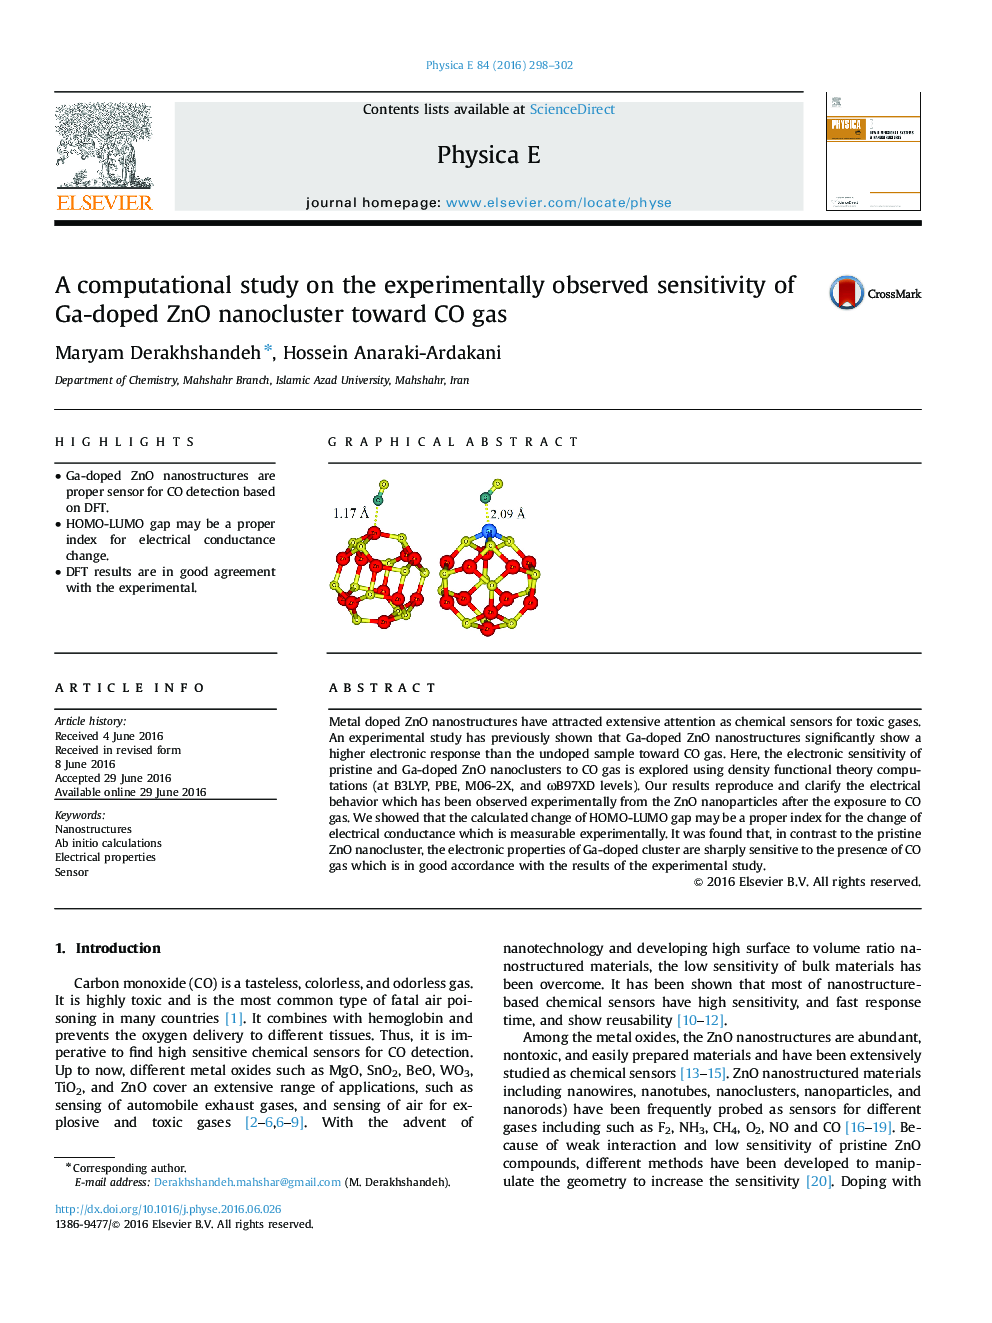 A computational study on the experimentally observed sensitivity of Ga-doped ZnO nanocluster toward CO gas